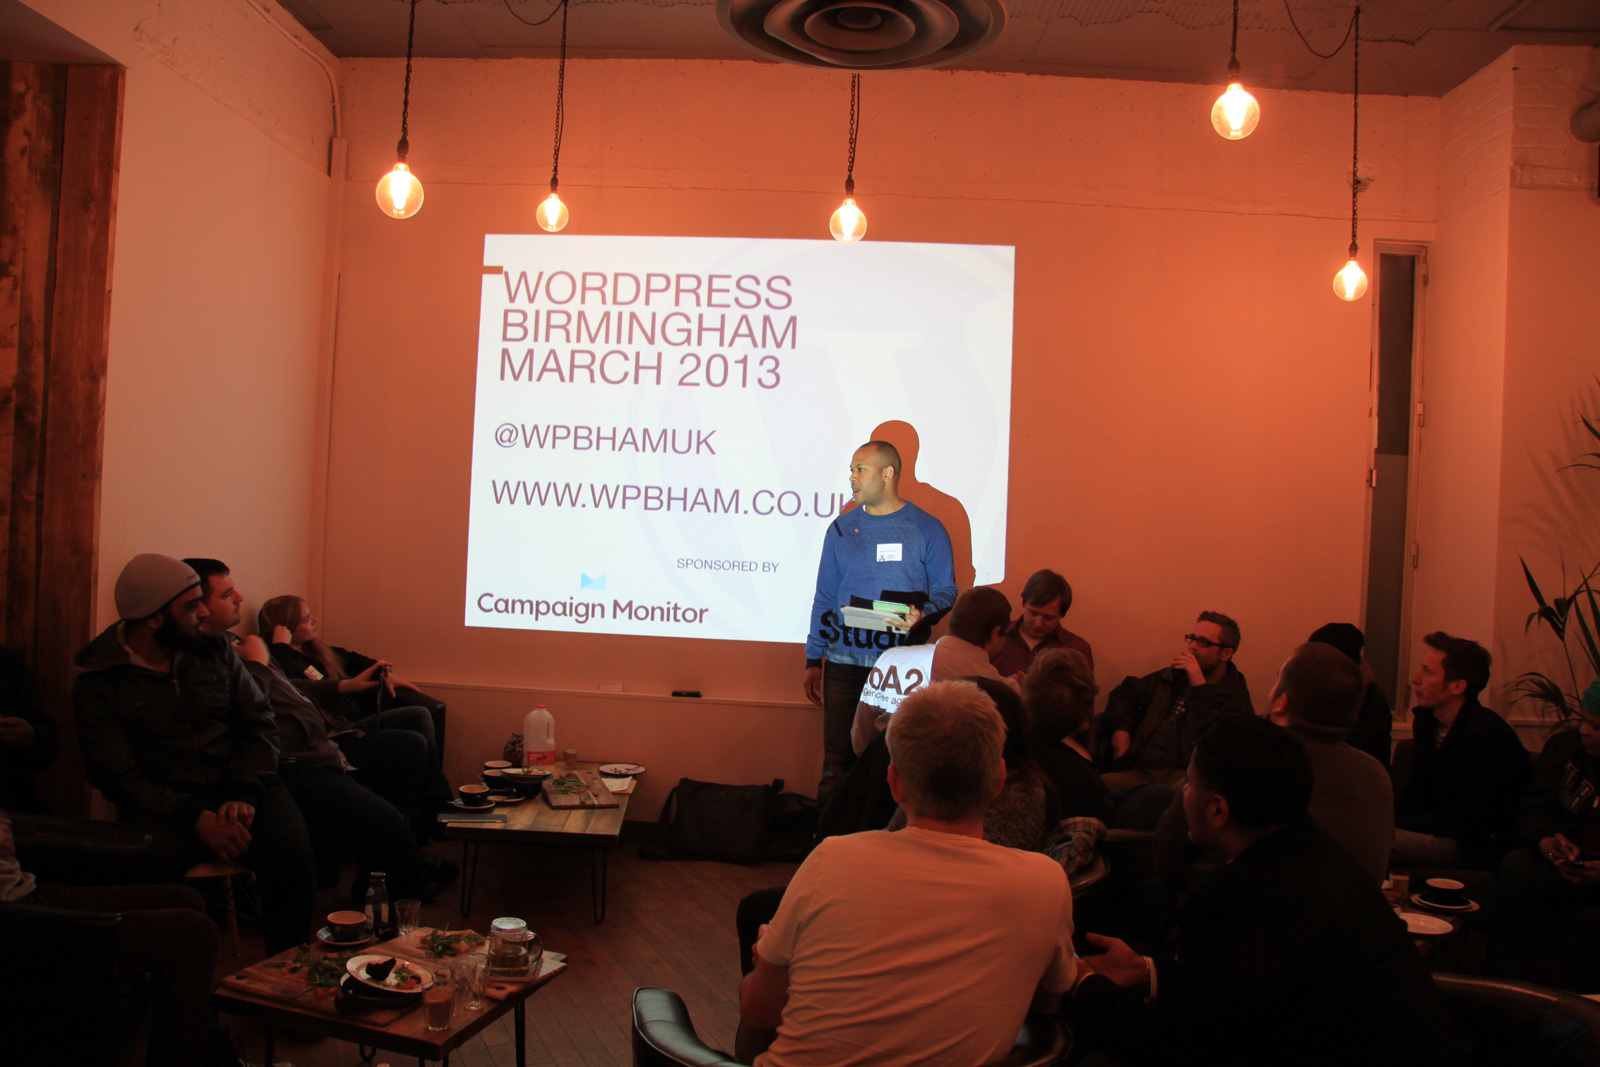 Wordpress Birmingham March 2013